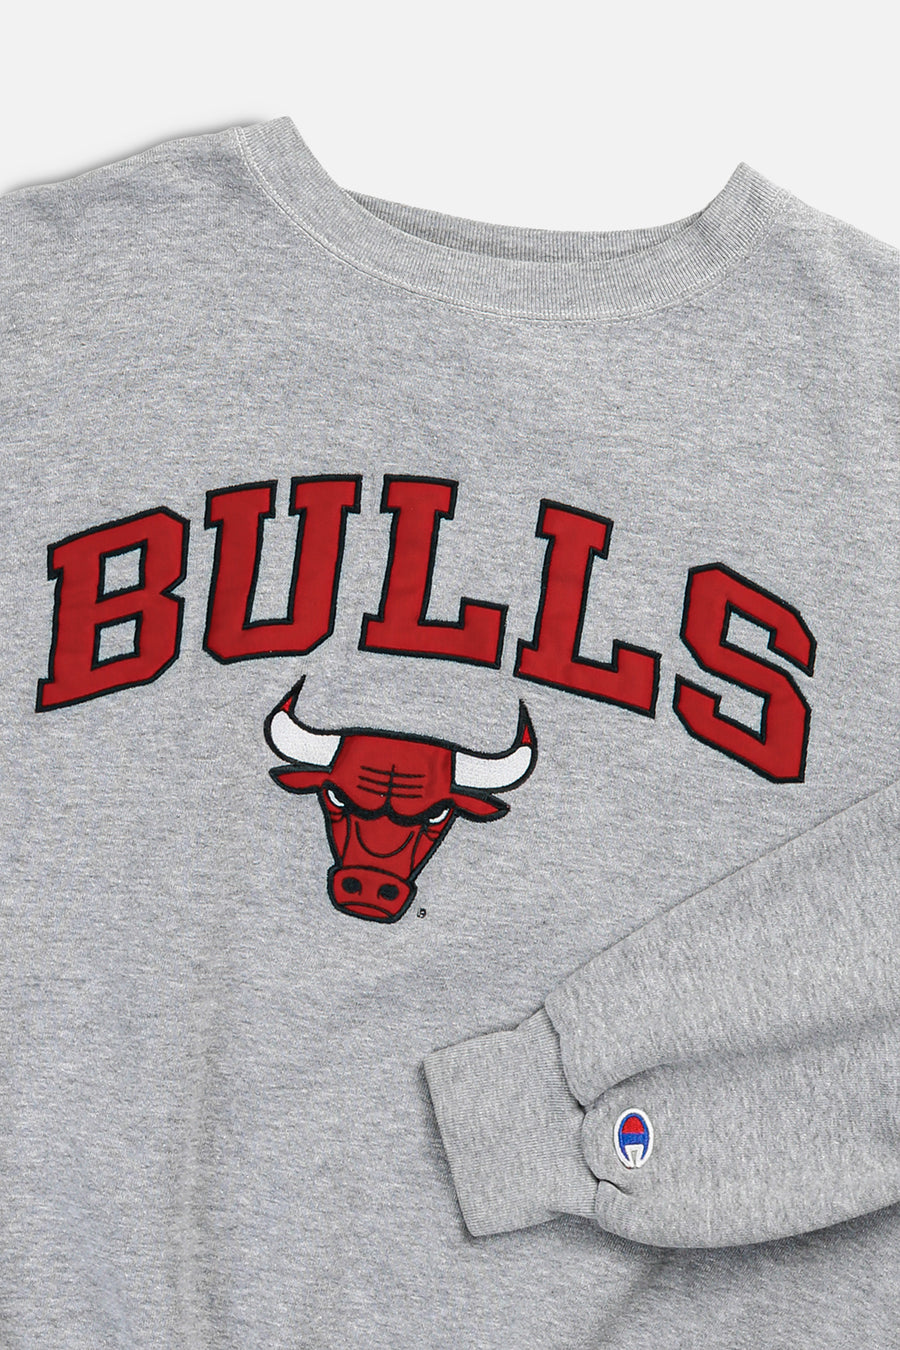 Vintage Chicago Bulls NBA Sweatshirt - M